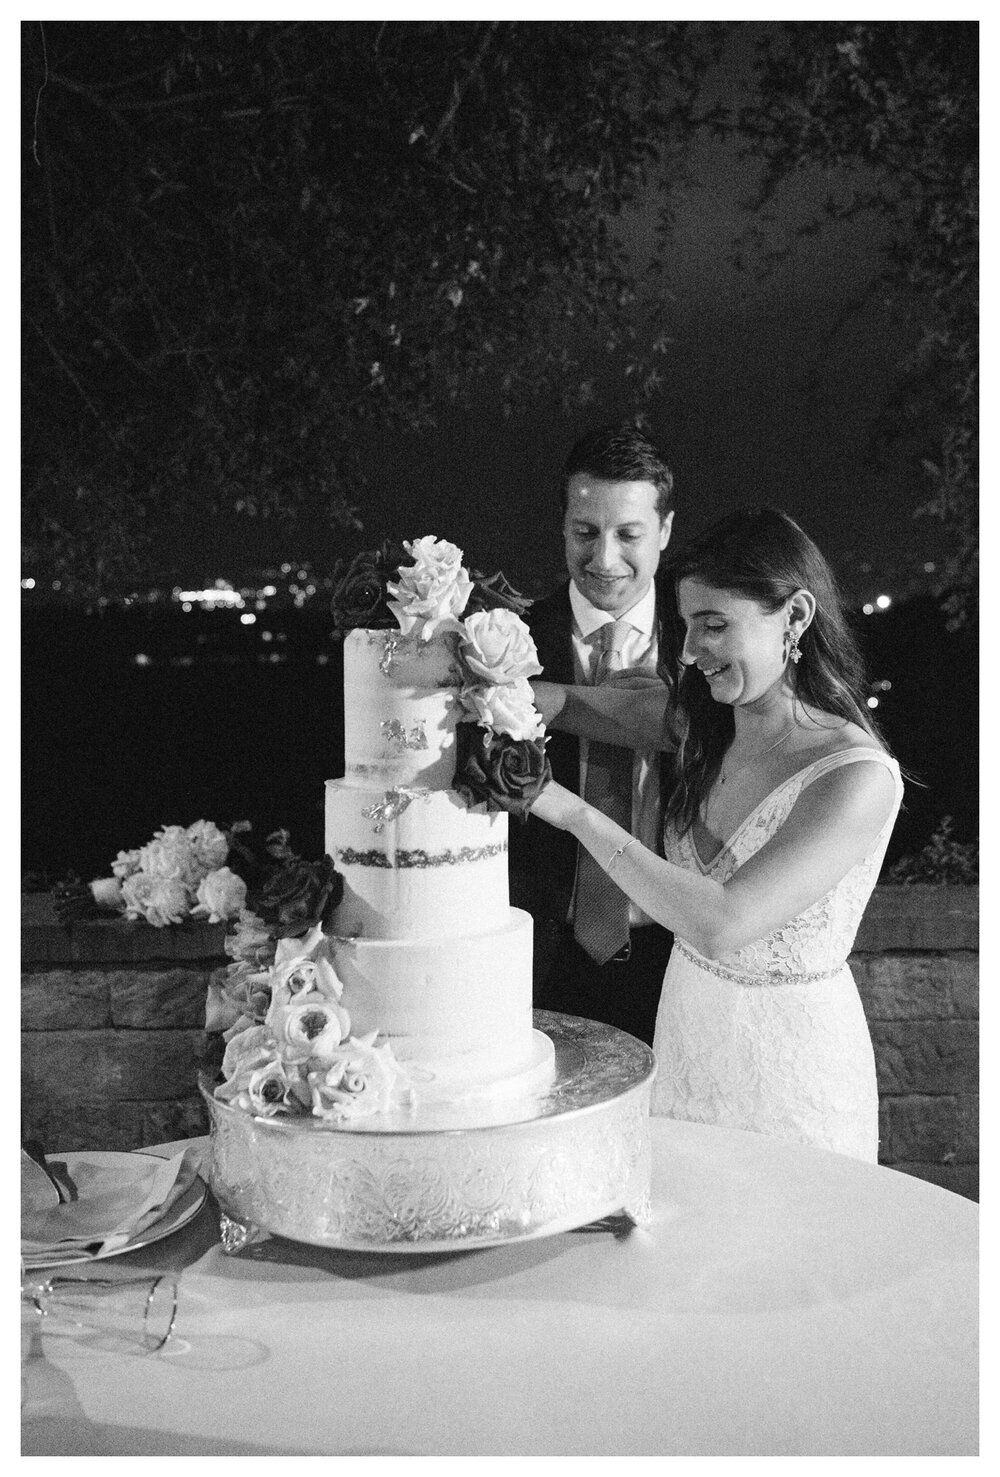  tuscany wedding cake, bride and groom cake cutting, tuscany wedding, florence wedding 